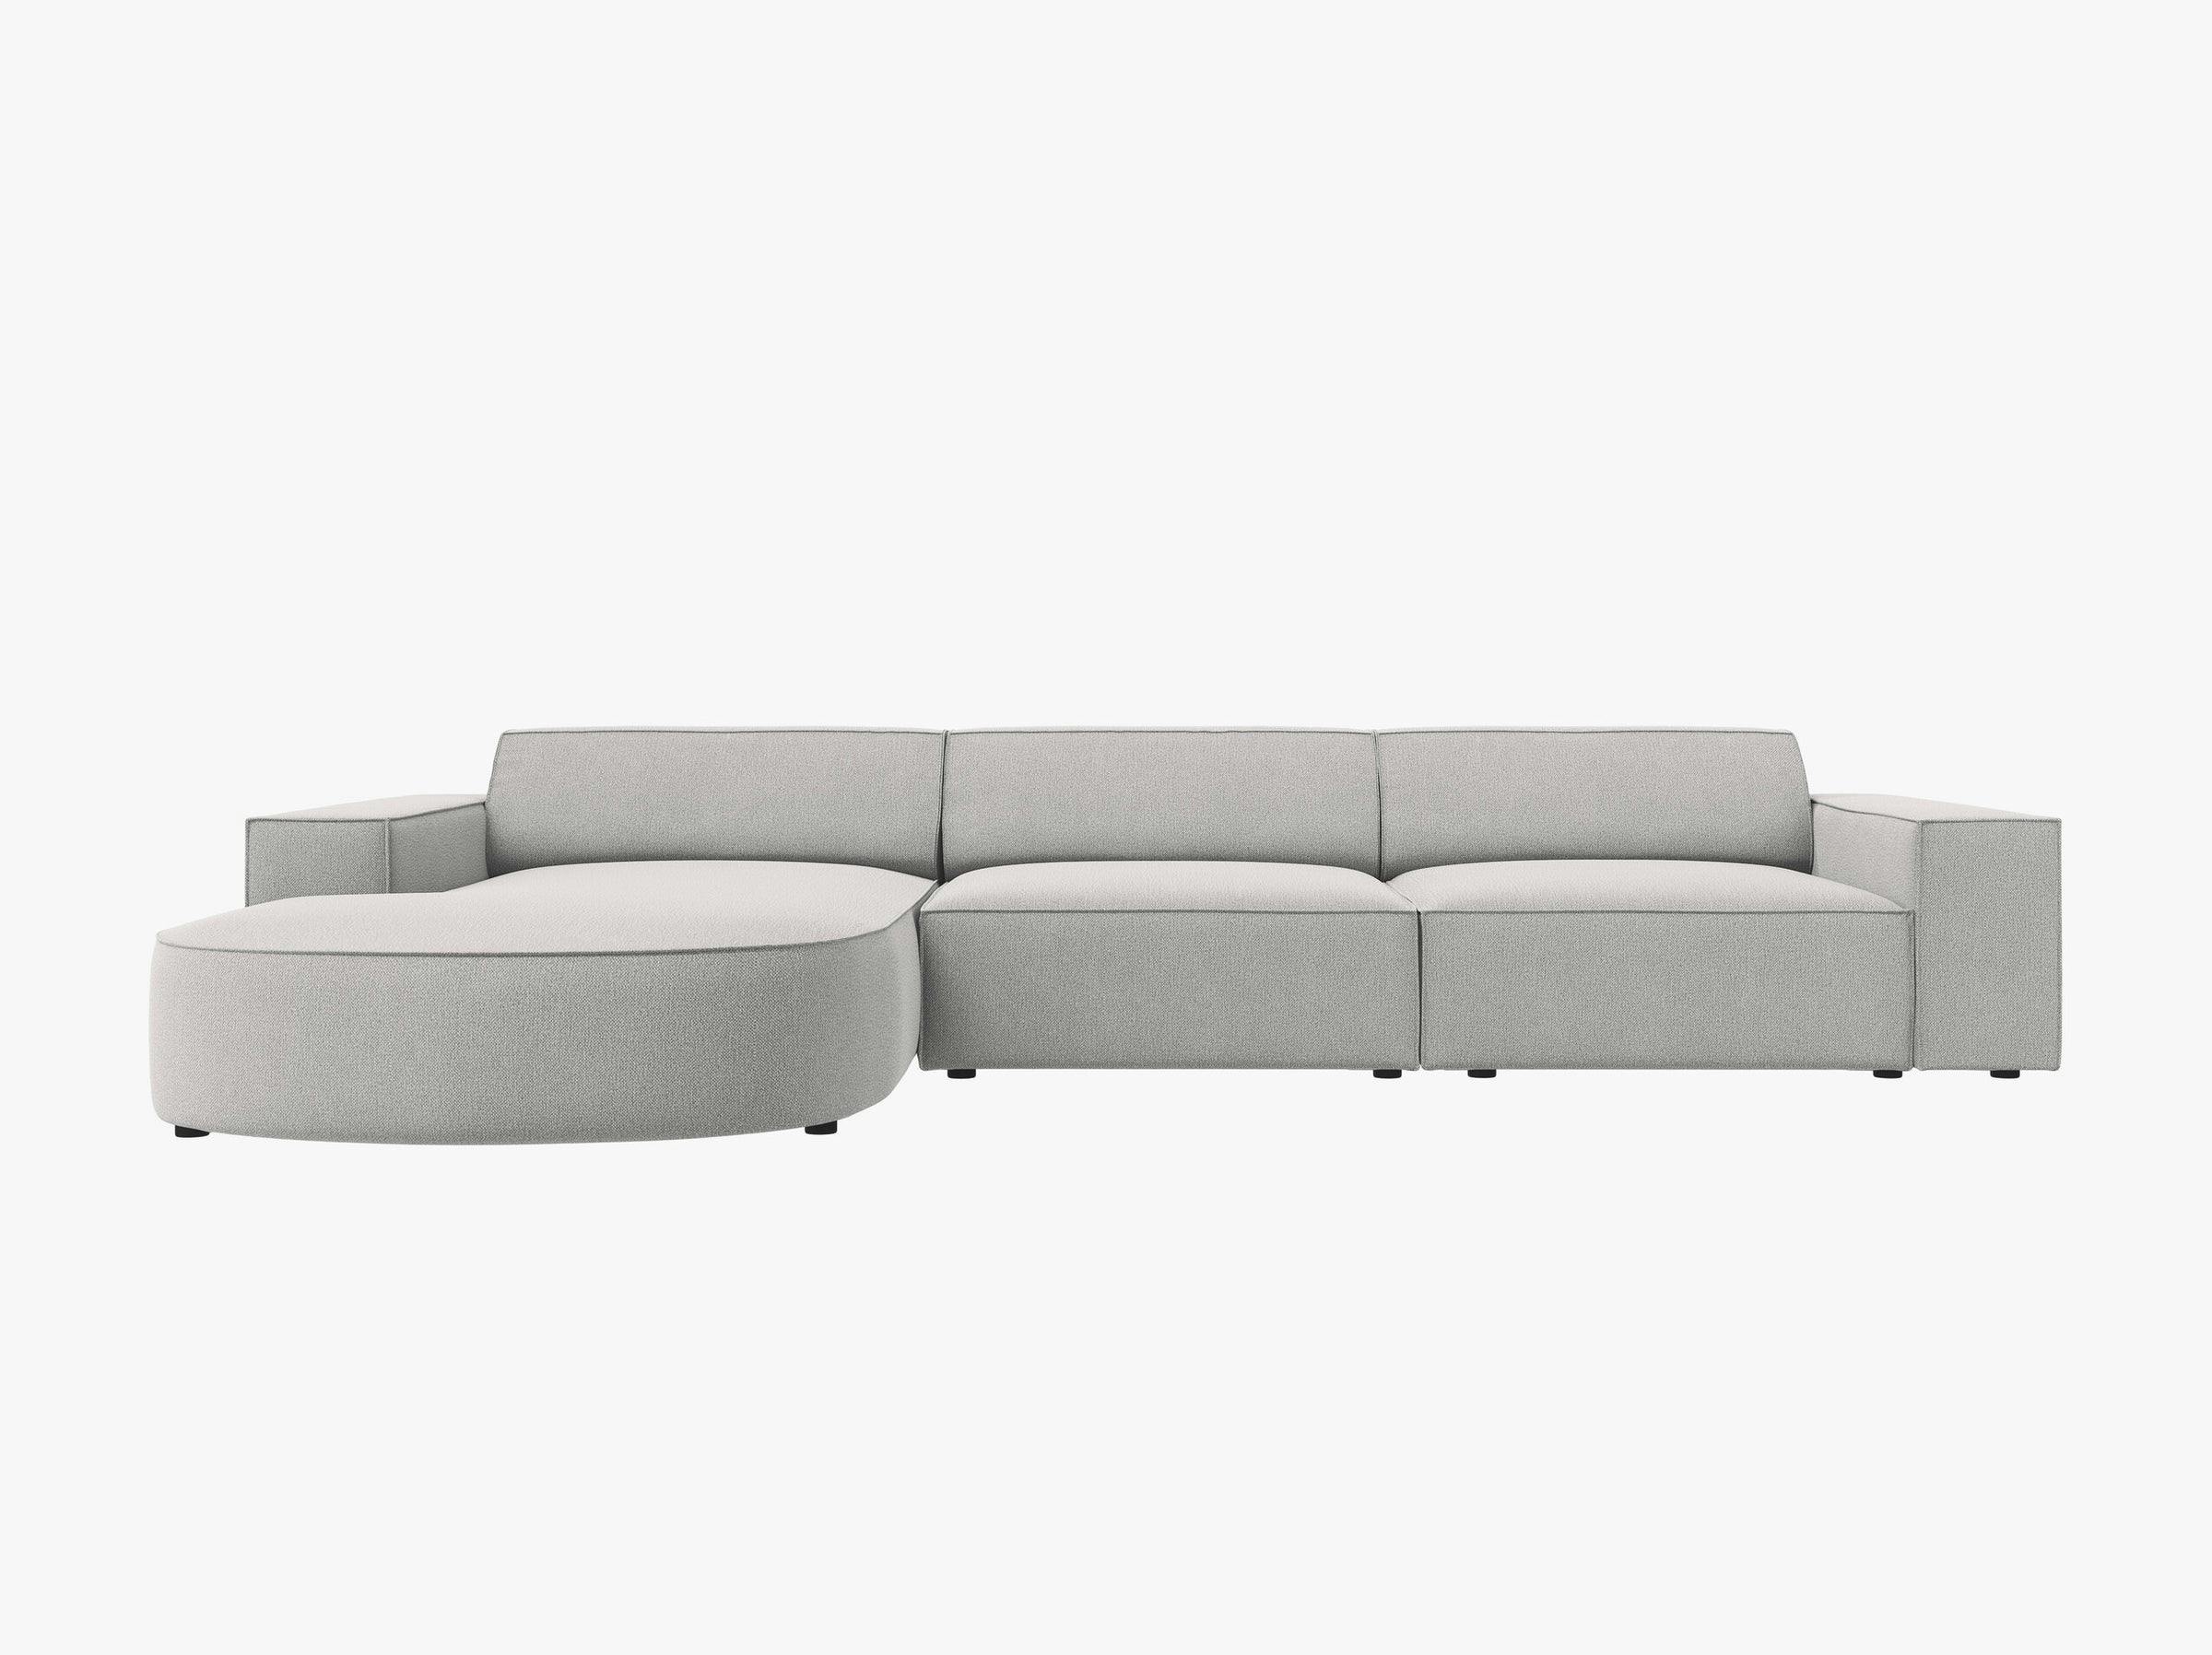 Jodie sofas structured fabric light grey